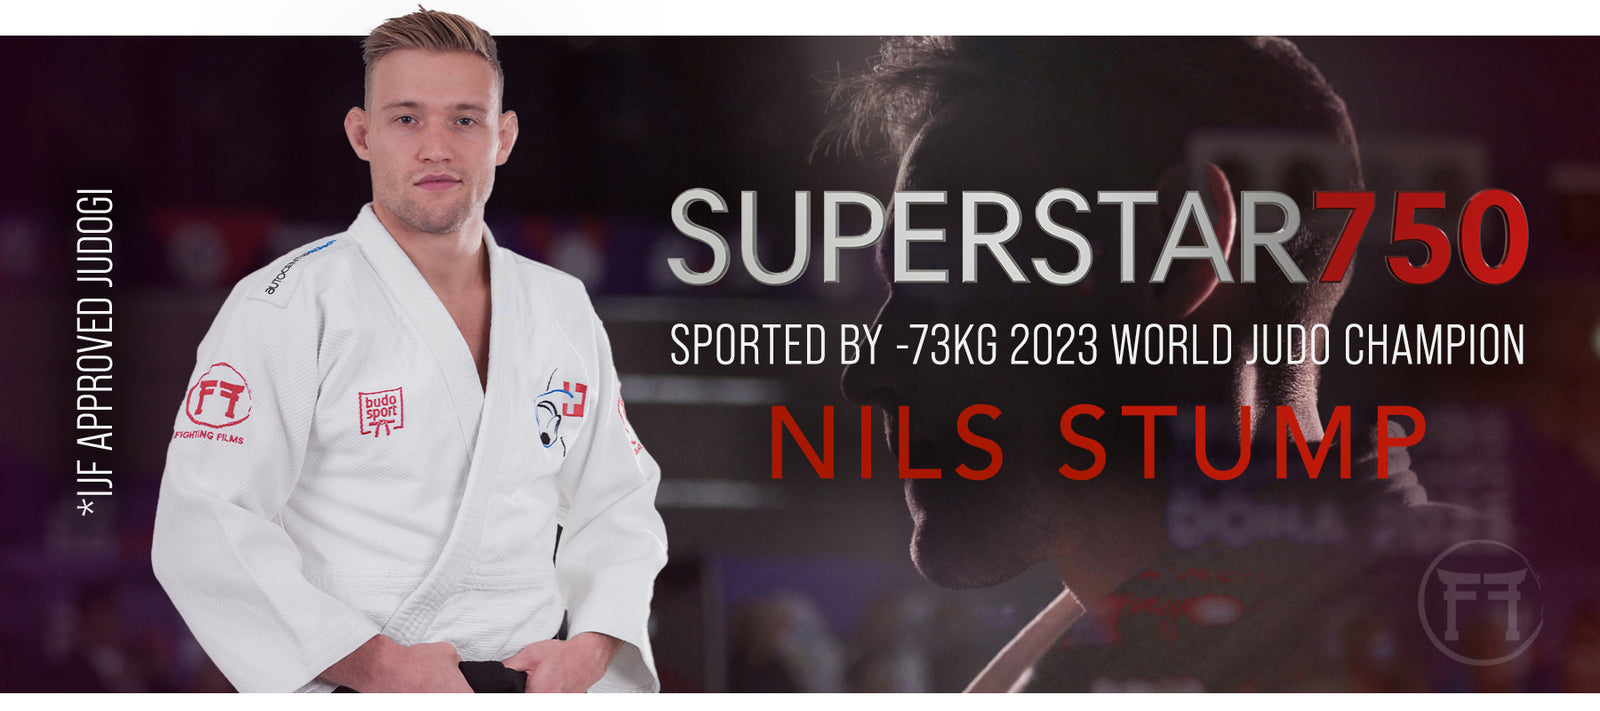 Superstar 750 judo kimono IJF France - FightingFilms